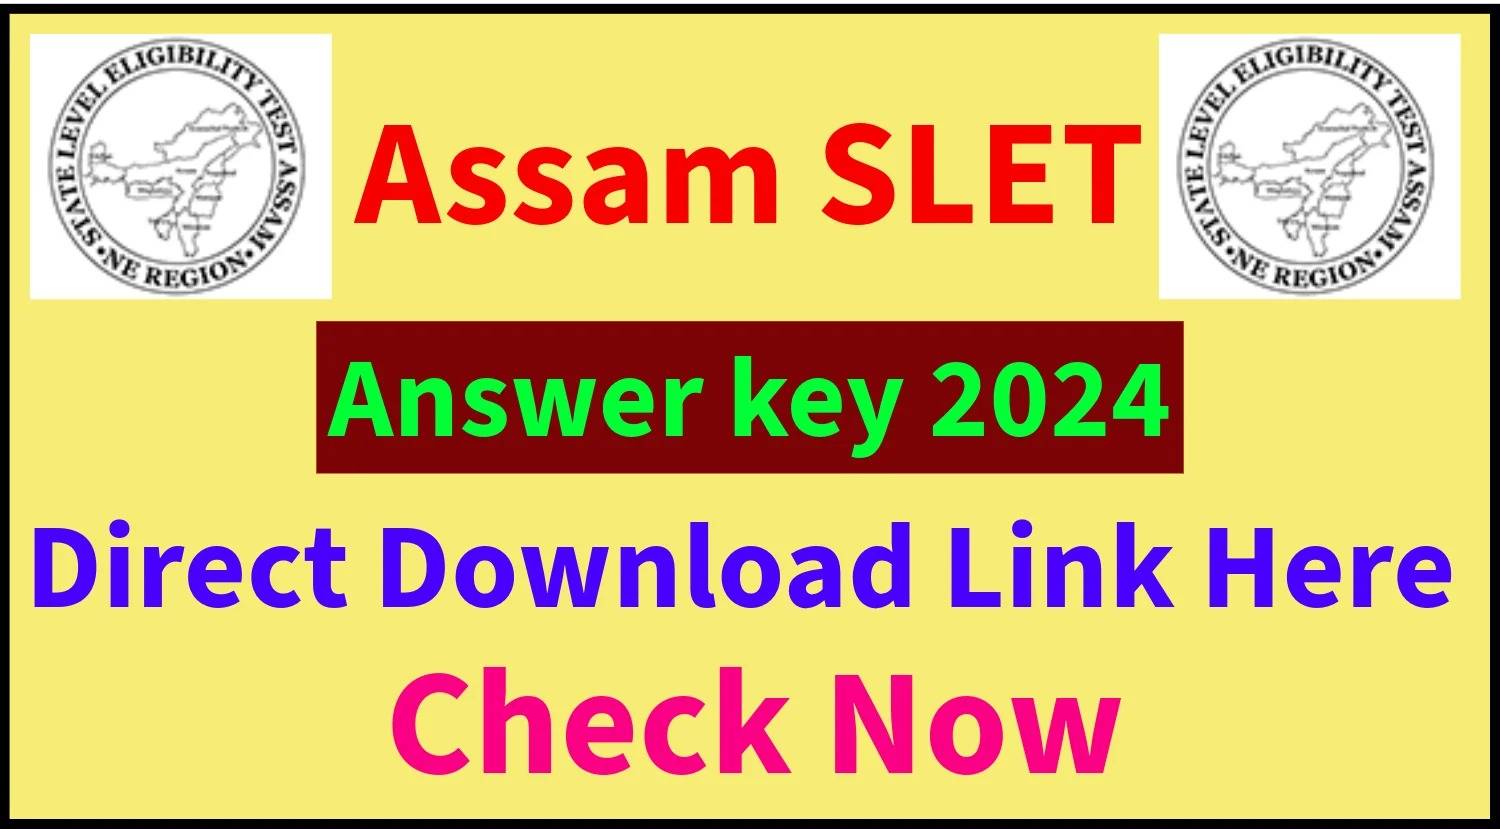 Assam SLET 2024 Answer Key Revised: Latest Updates on Revised Answer Key Release